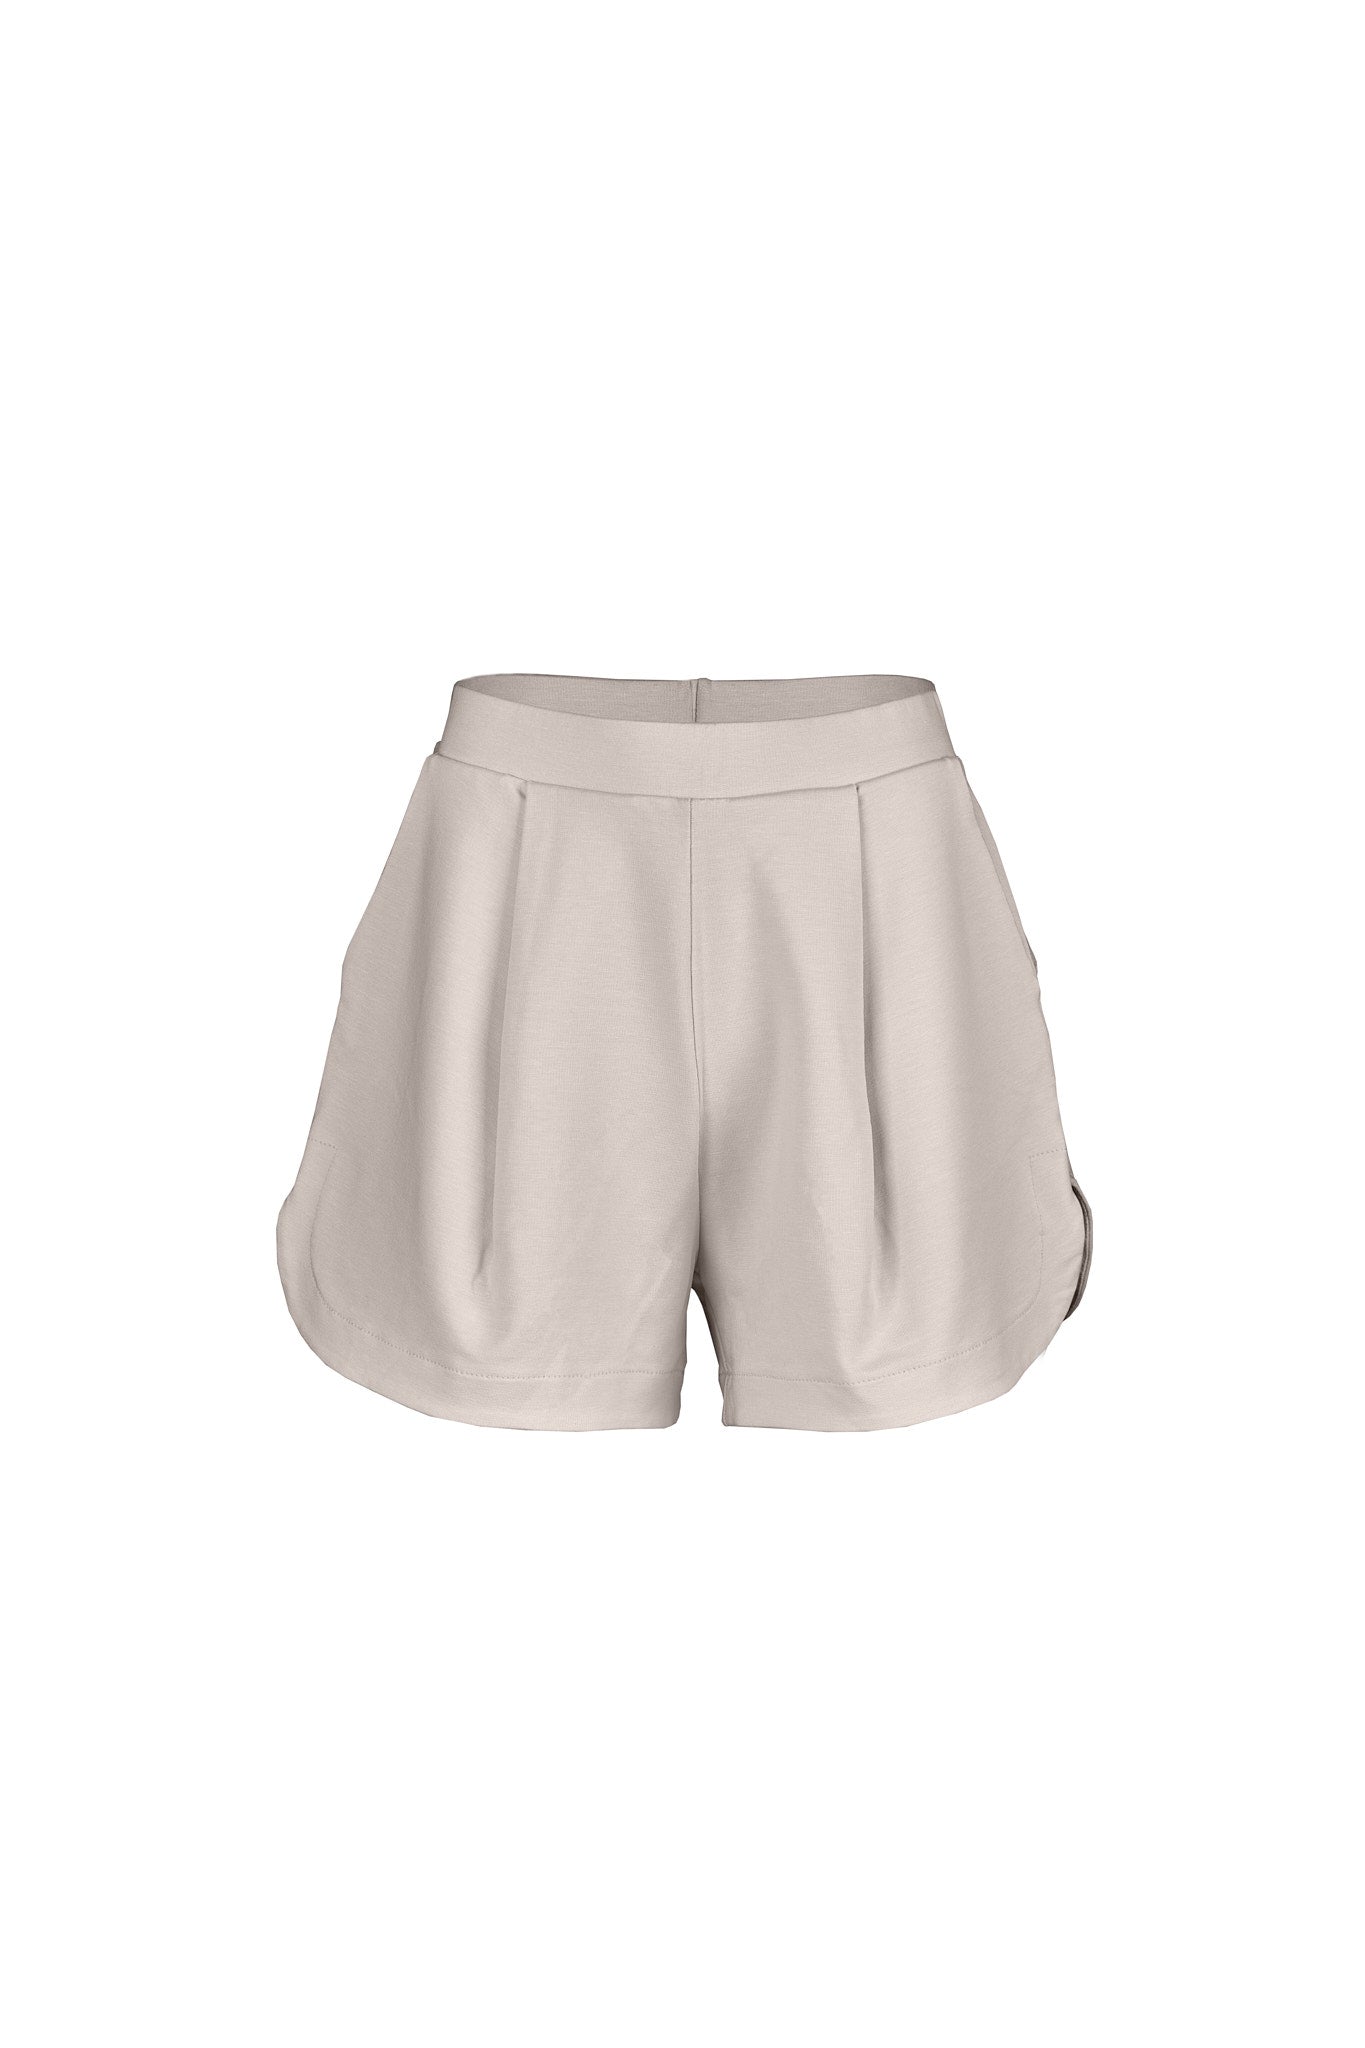 White Fornal shorts made of lyocell by MOYA KALA 